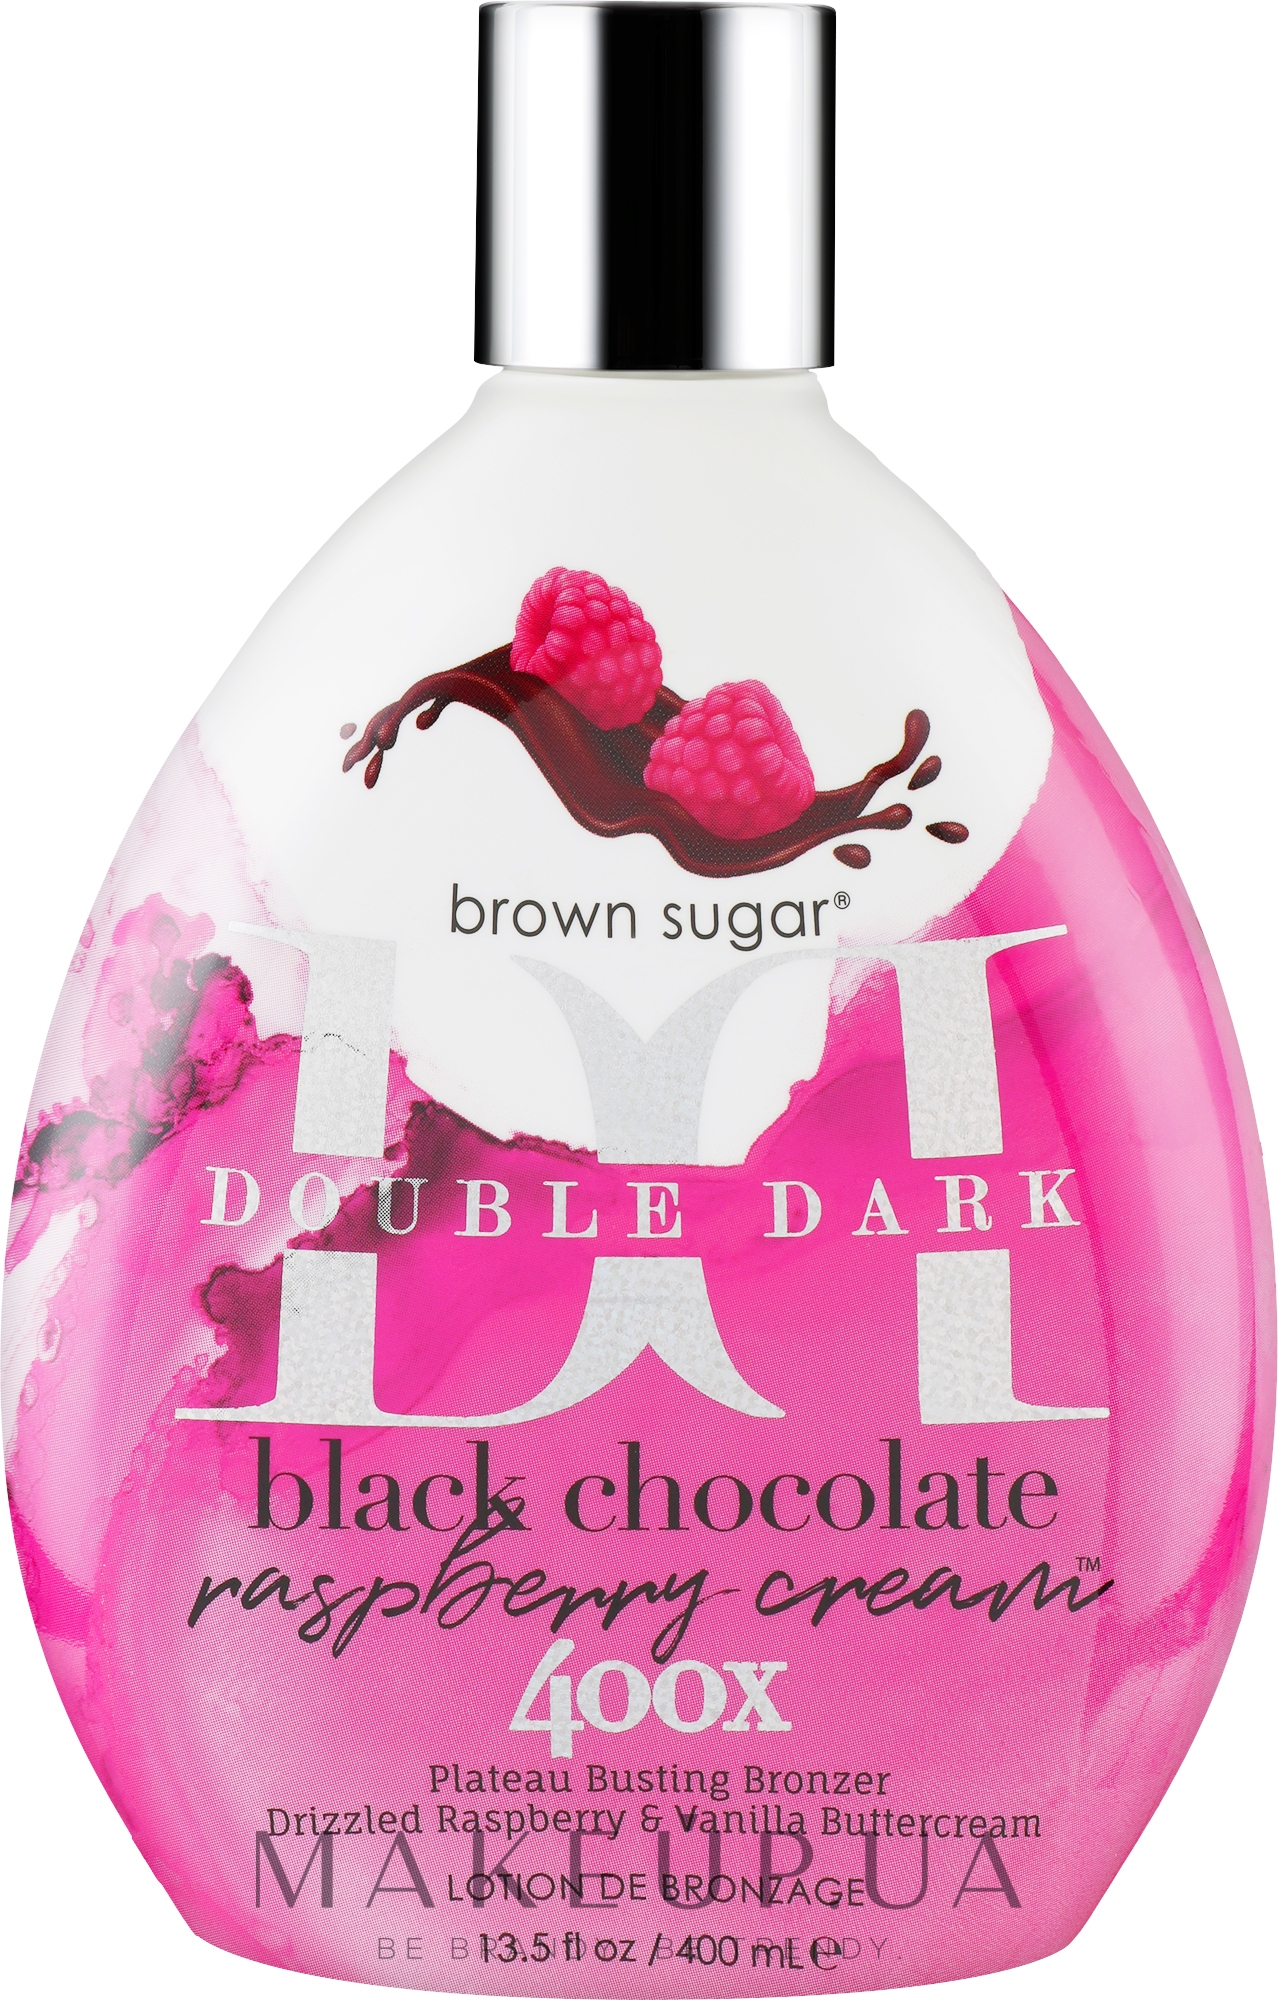 Крем для солярия для ультра темного оттенка с омолаживающим эффектом - Tan Incorporated Raspberry & Cream 400x Double Dark Black Chocolate — фото 400ml